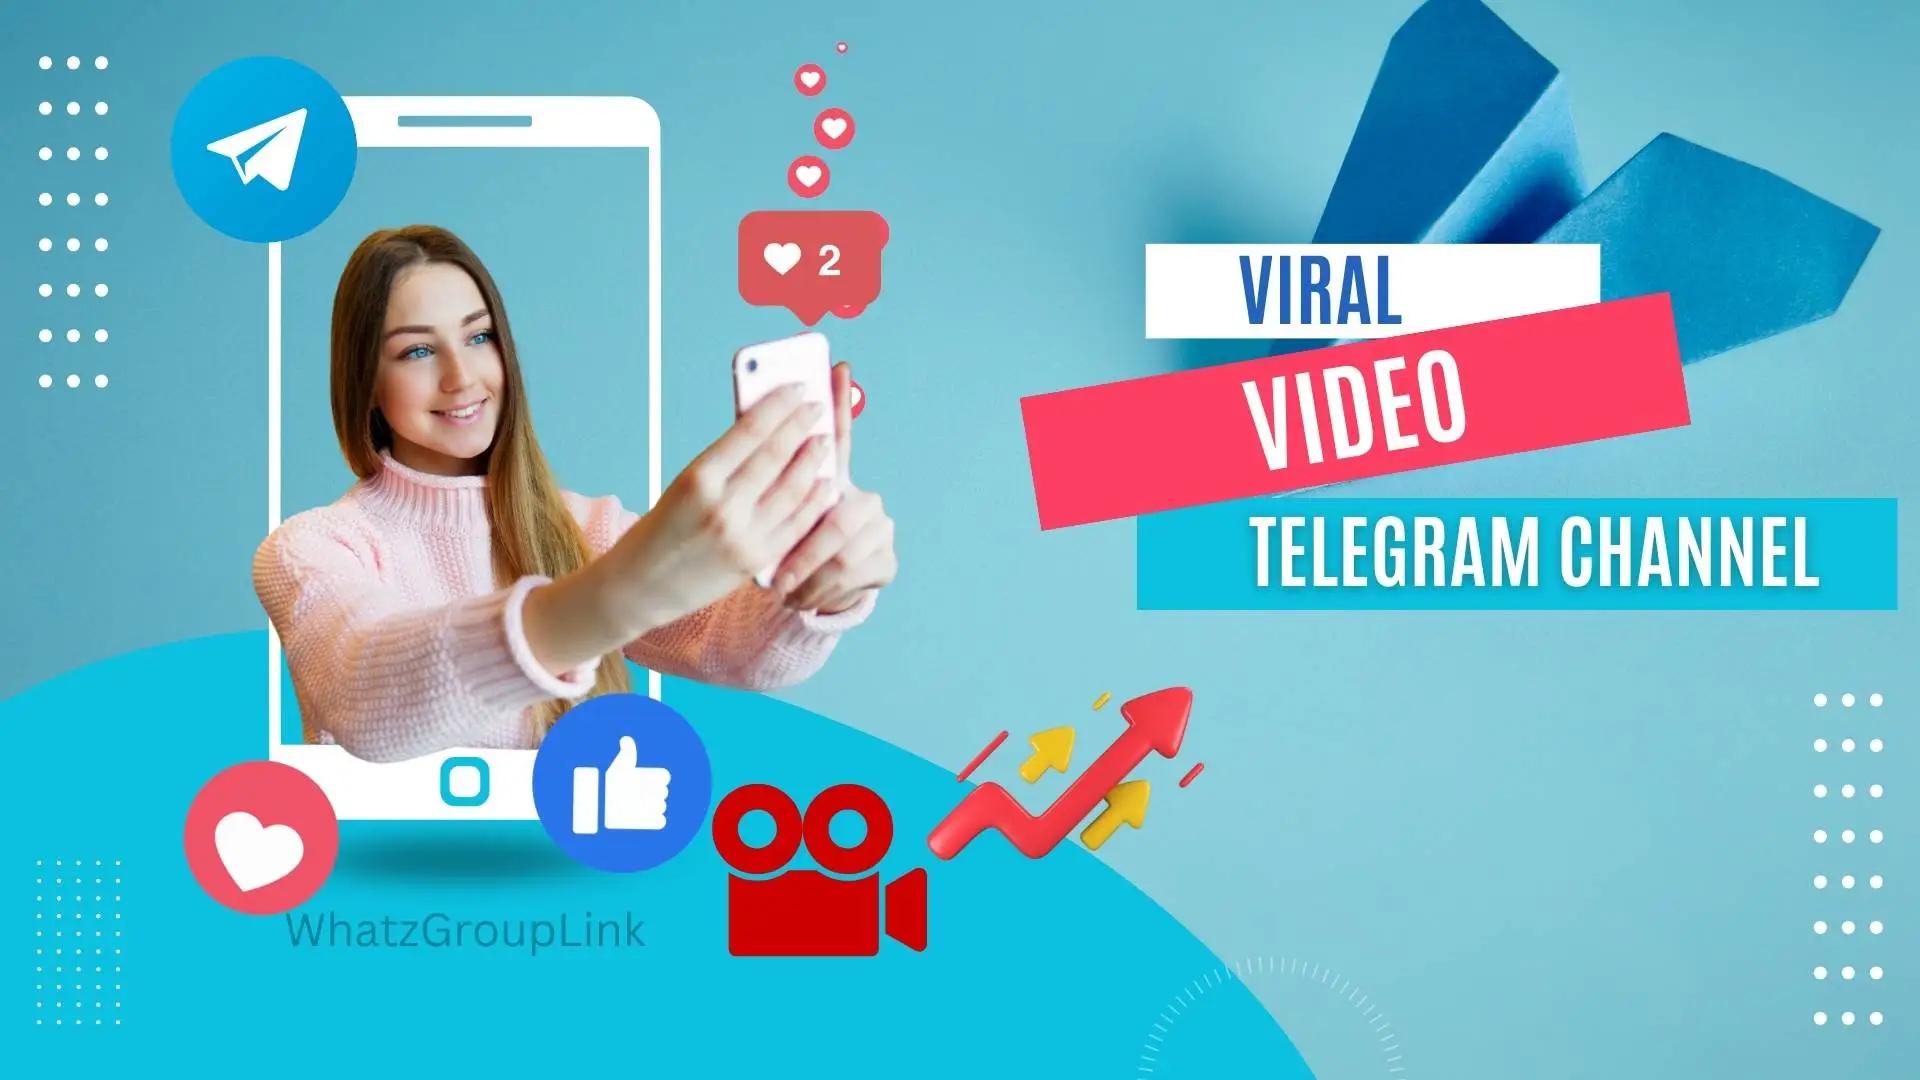 Viral Video Link Telegram Channel